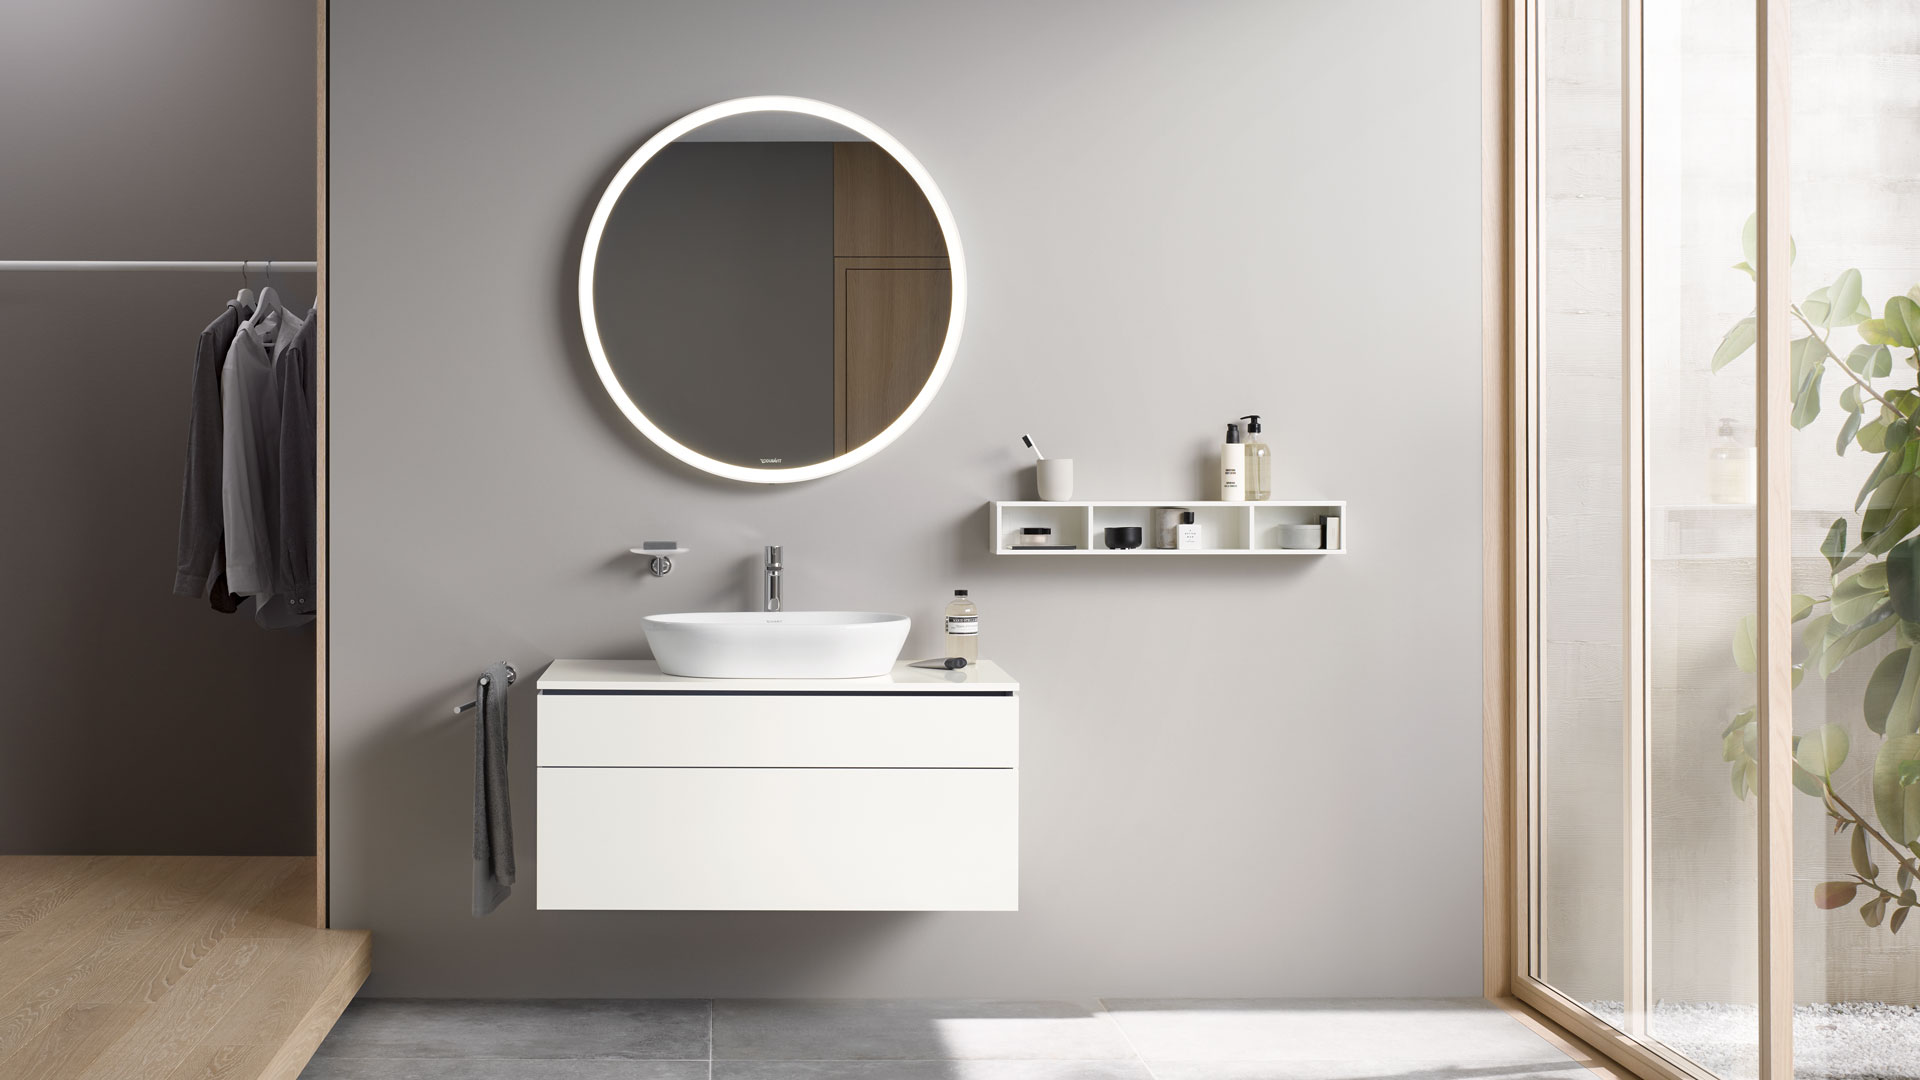 L-Cube furniture washbasin c-shaped, shelf element and mirror
